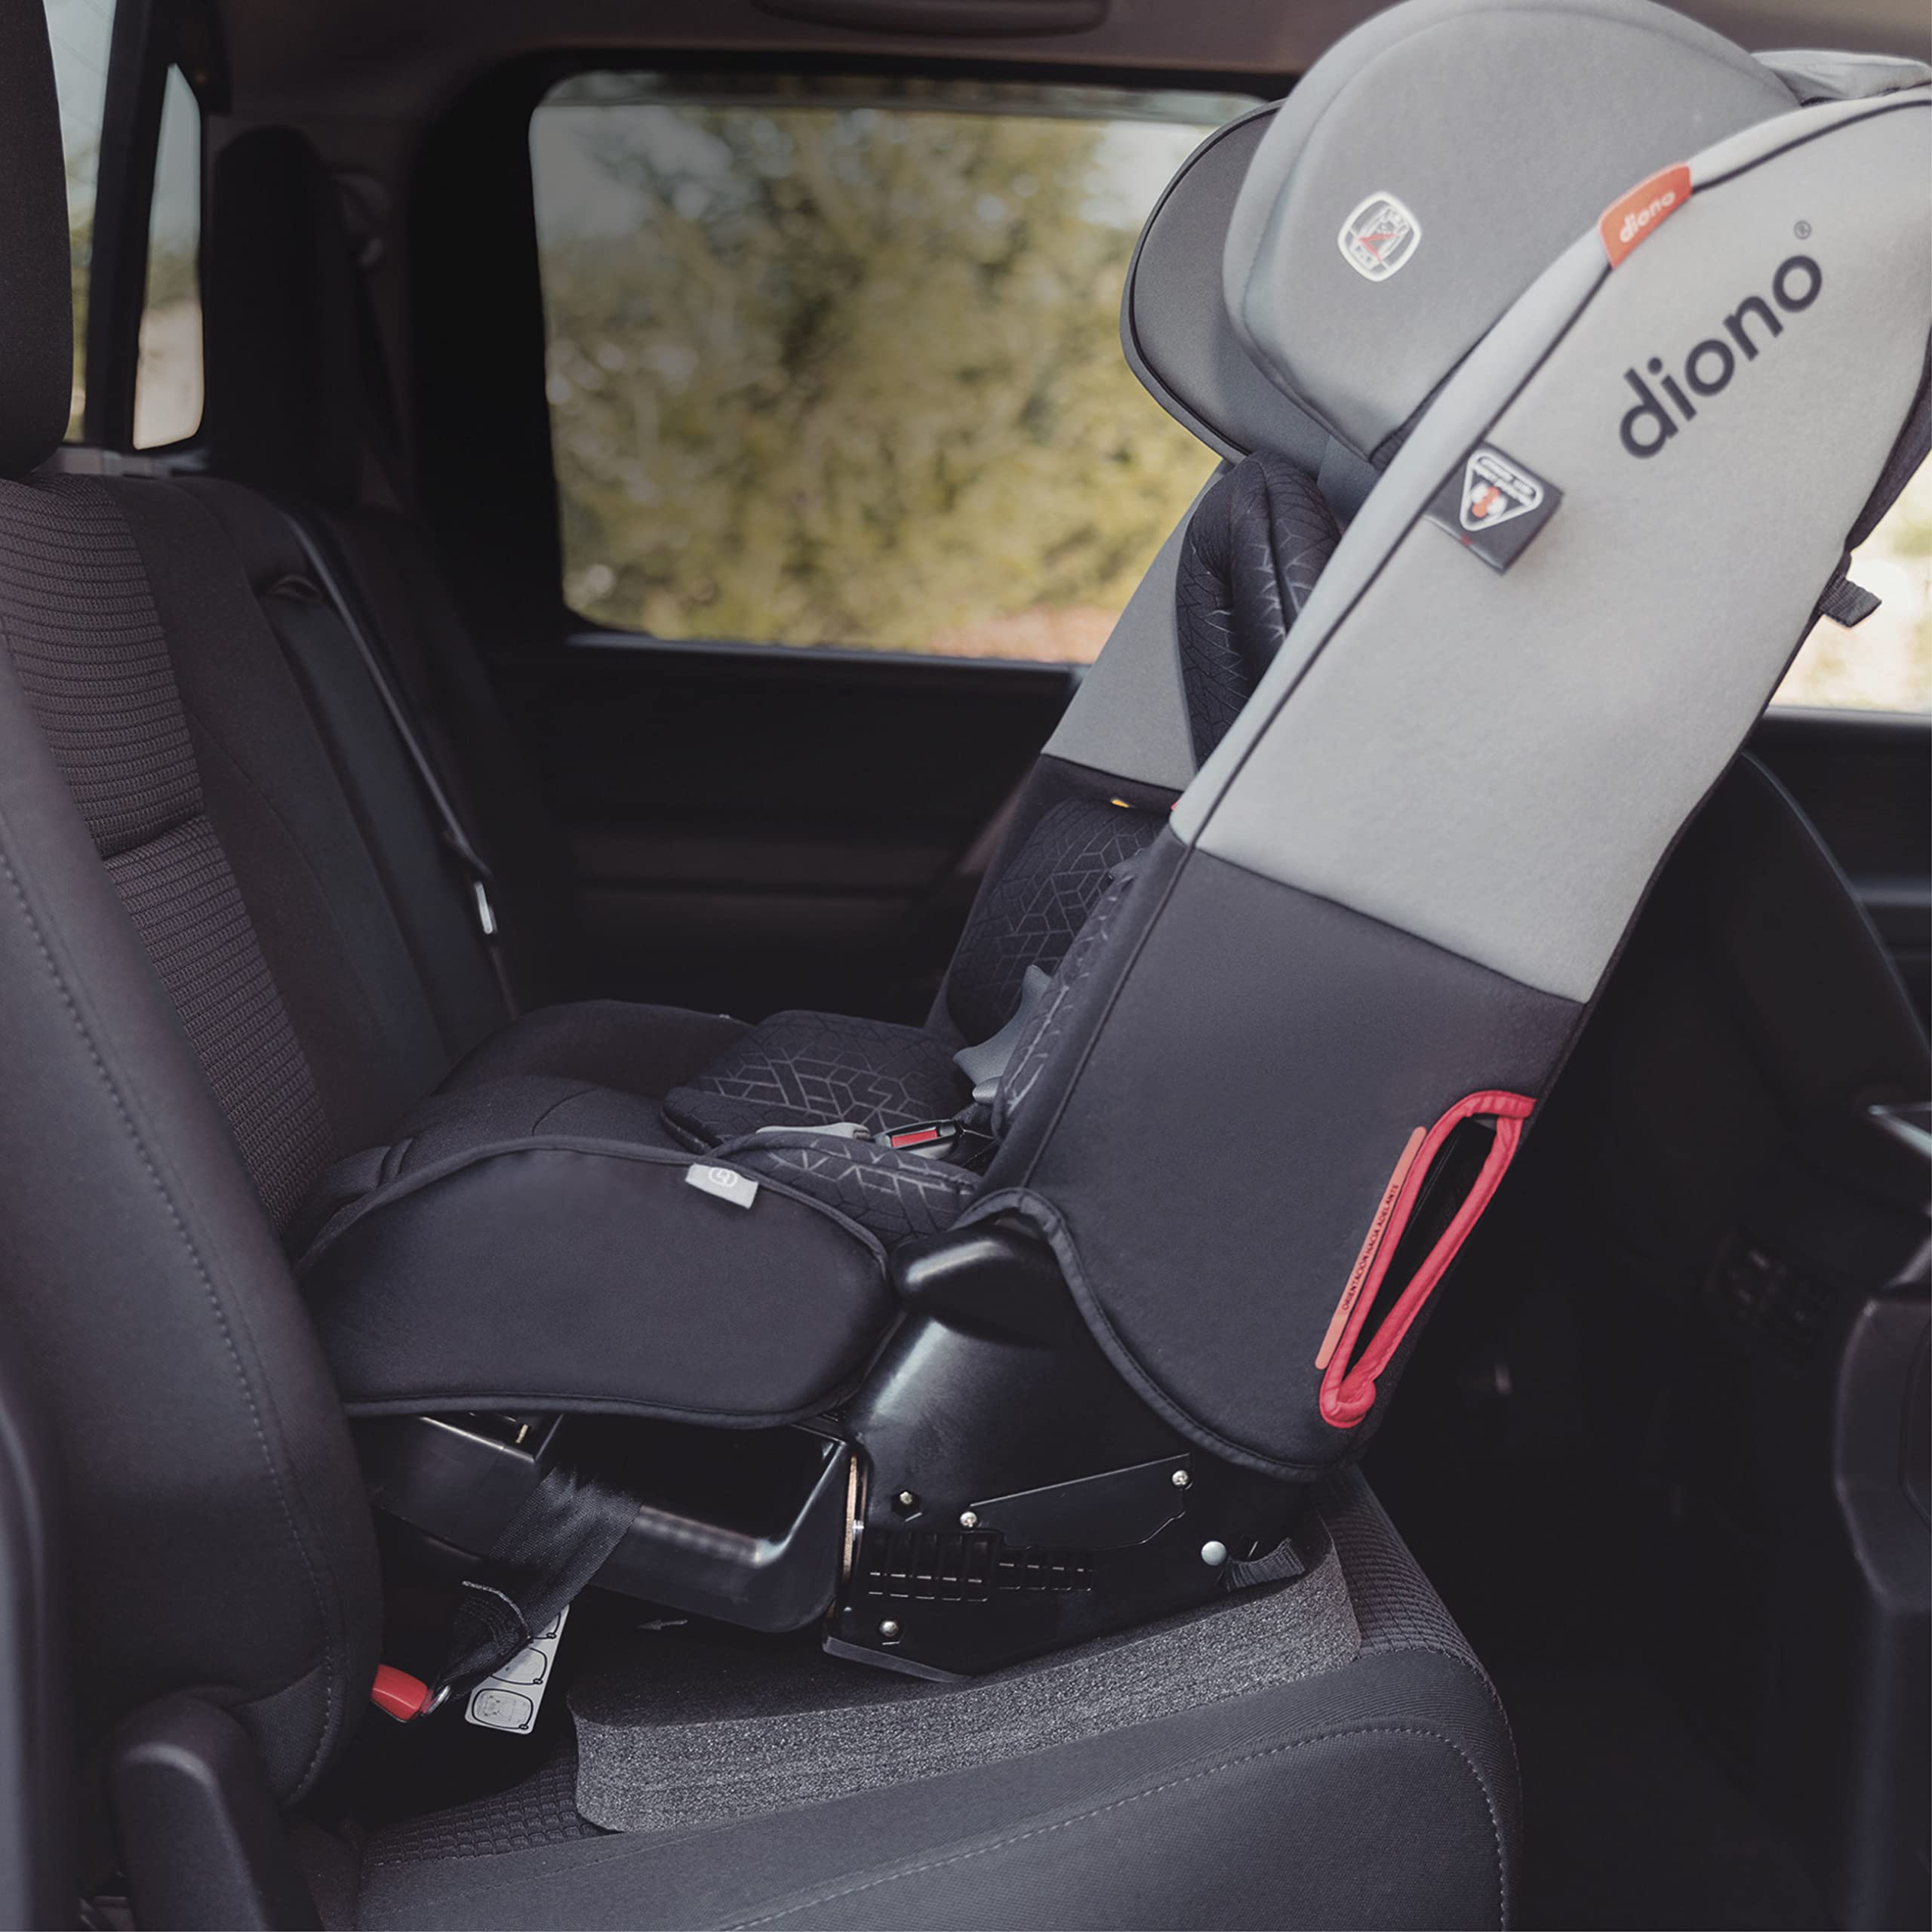 Diono Angle Adjuster Car Seat Leveler, Car Seat Wedge Cushion, Foam Provides More Legroom for Rear-Facing Car Seats